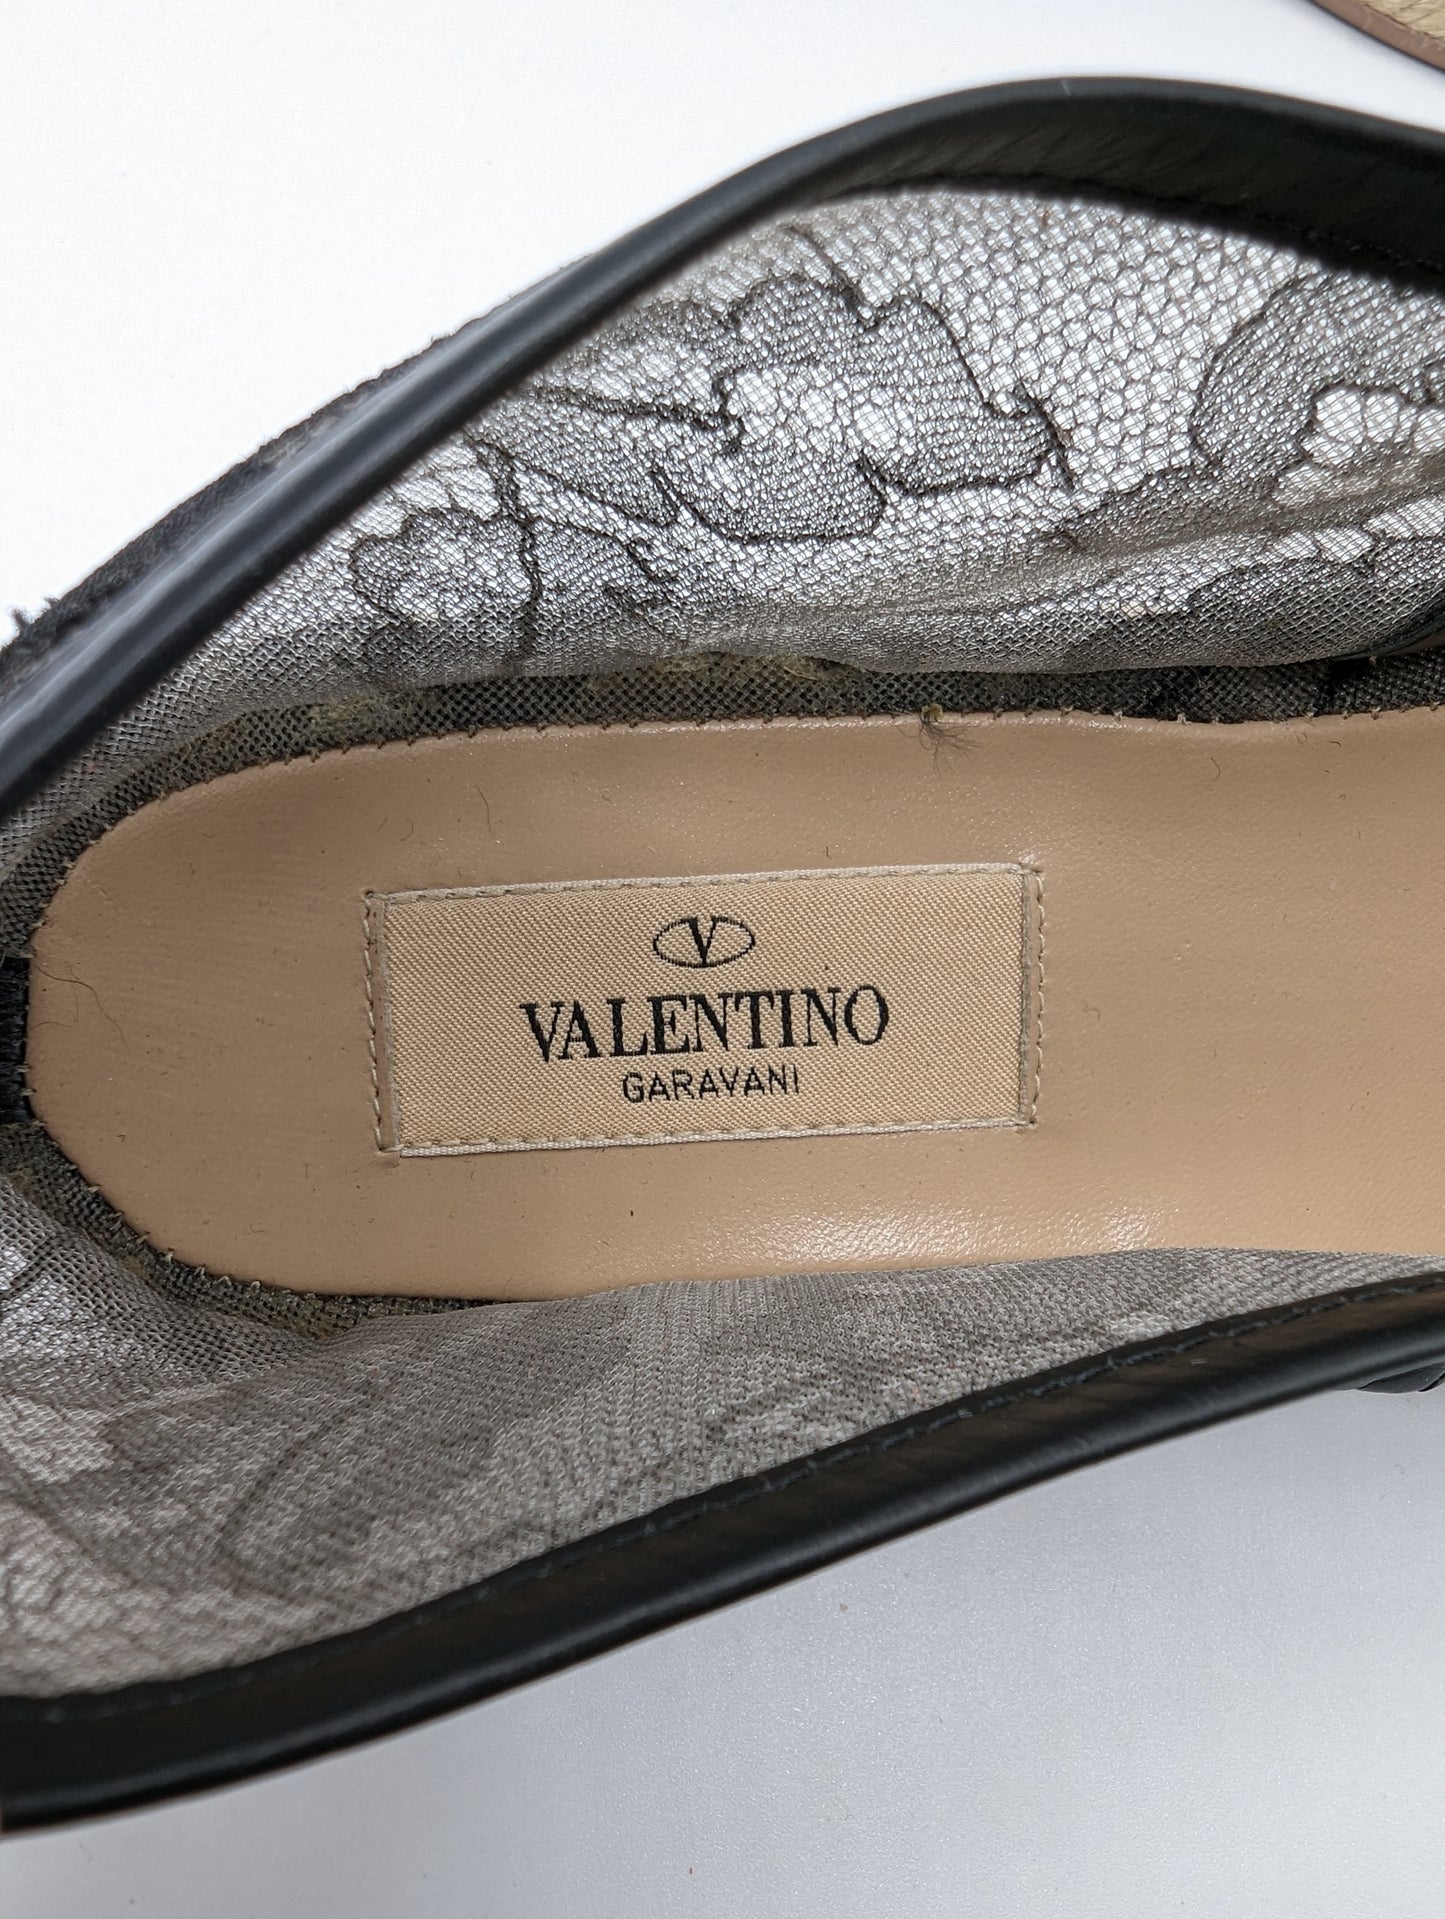 Valentino Garavani Black Lace Espadrilles Size 40